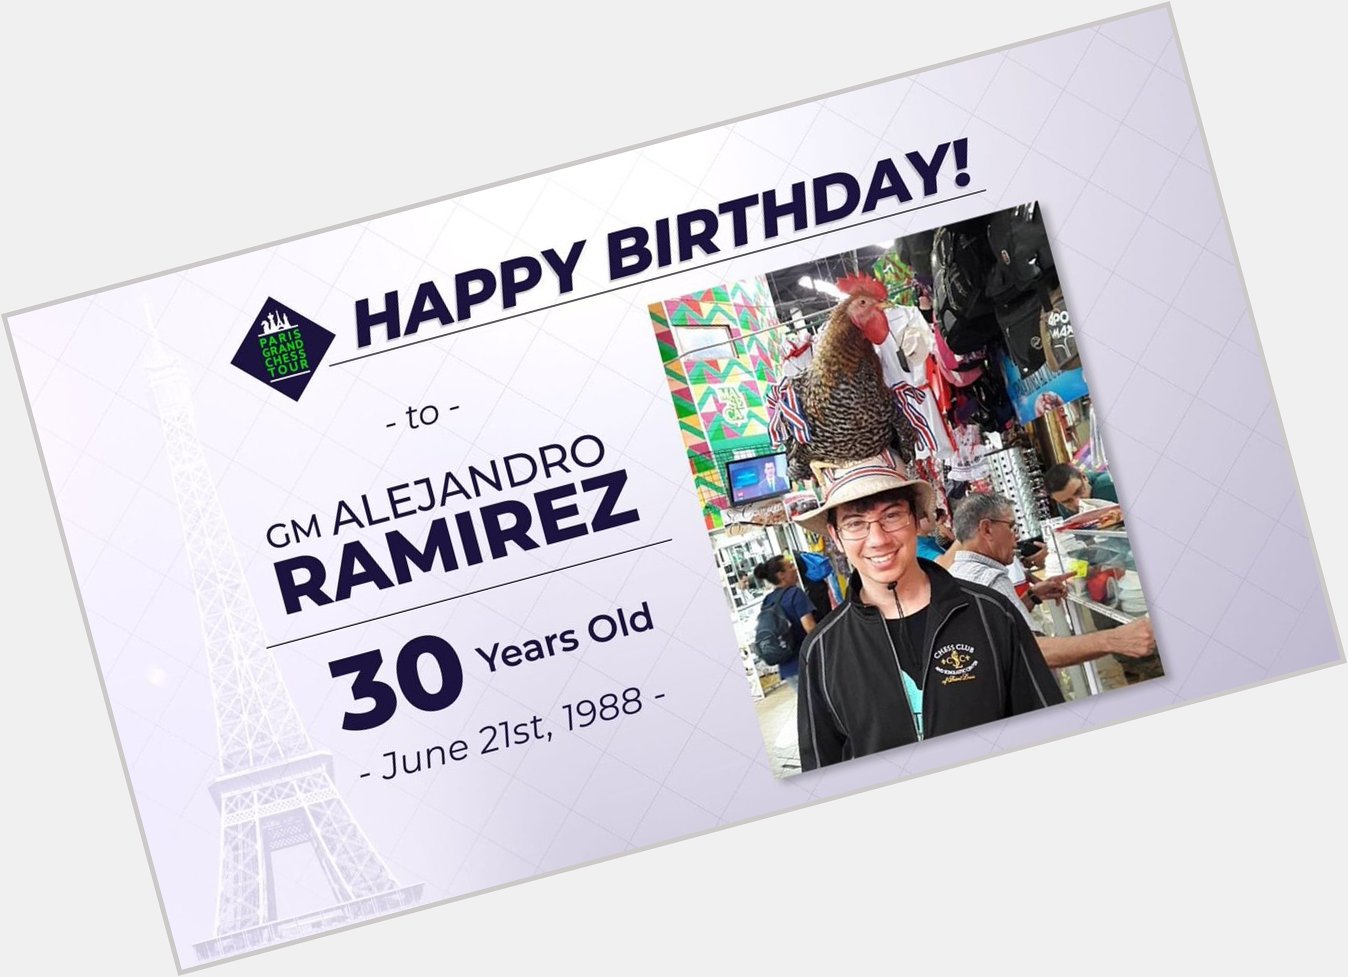 Happy birthday to one of our favorite commentators, Alejandro Ramirez! 